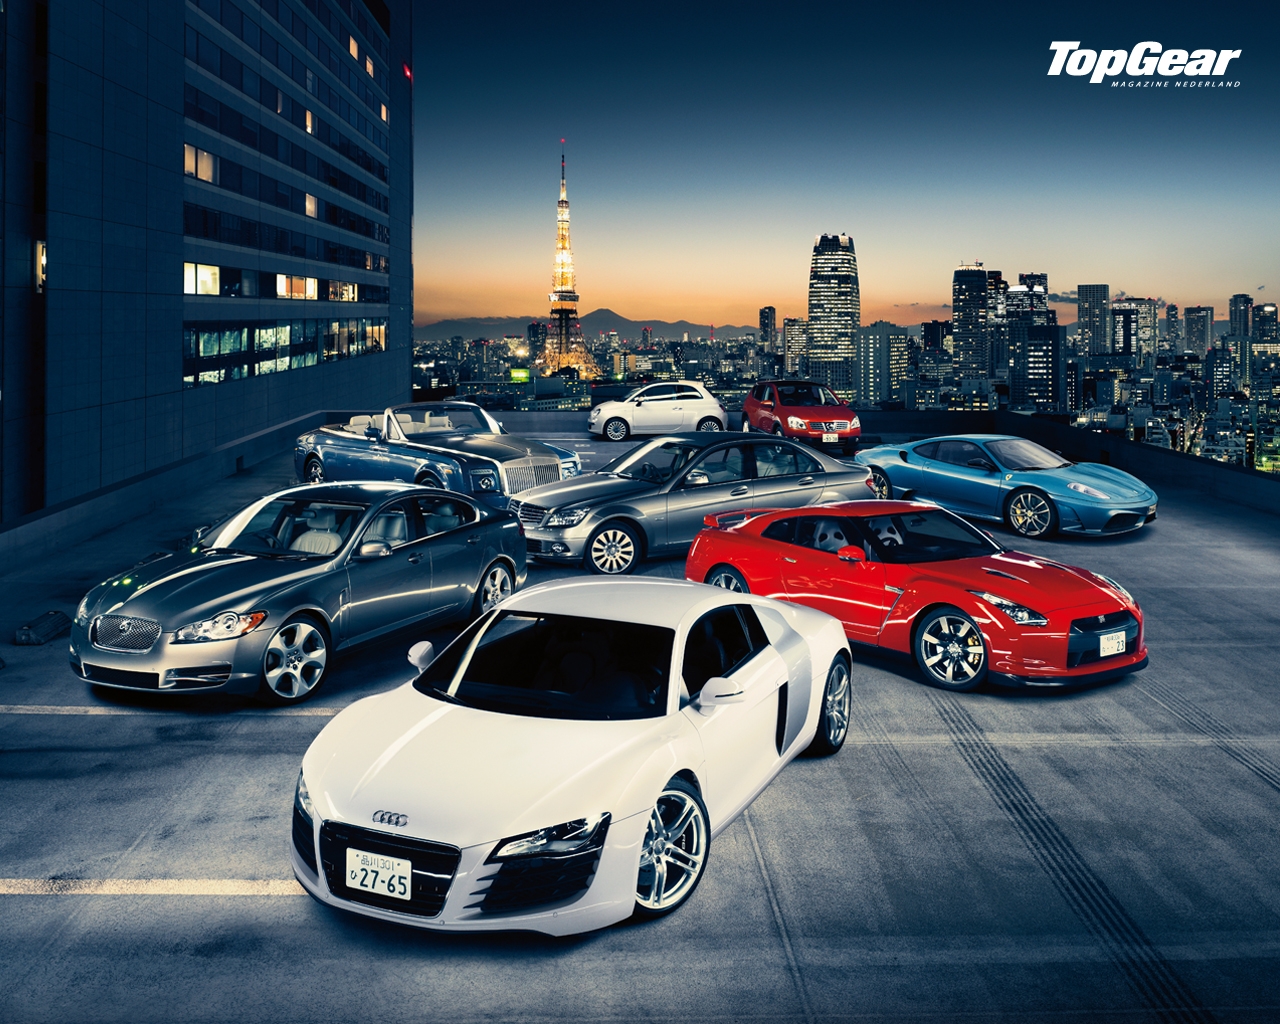 Enjoy This Top Gear Background Wallpaper